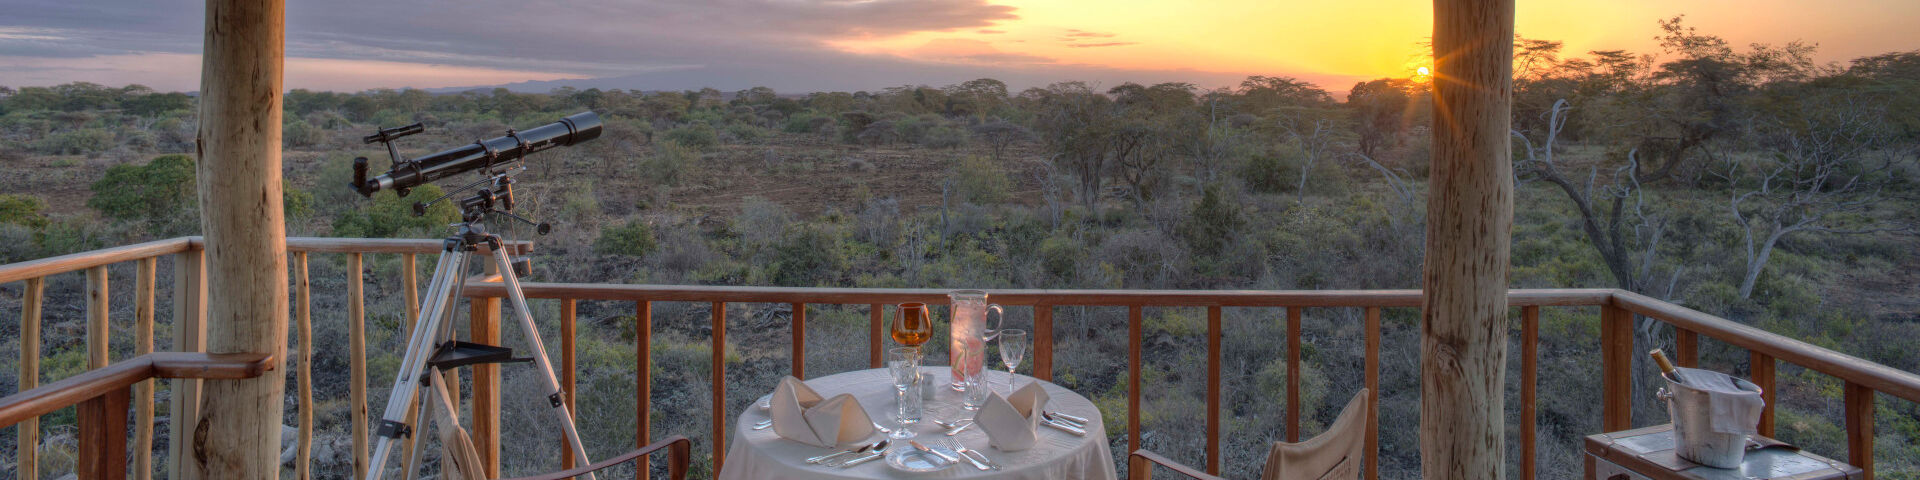 Finch Hattons Luxury Tented Camp - Tsavo West - Tsavo National Park - Kenya